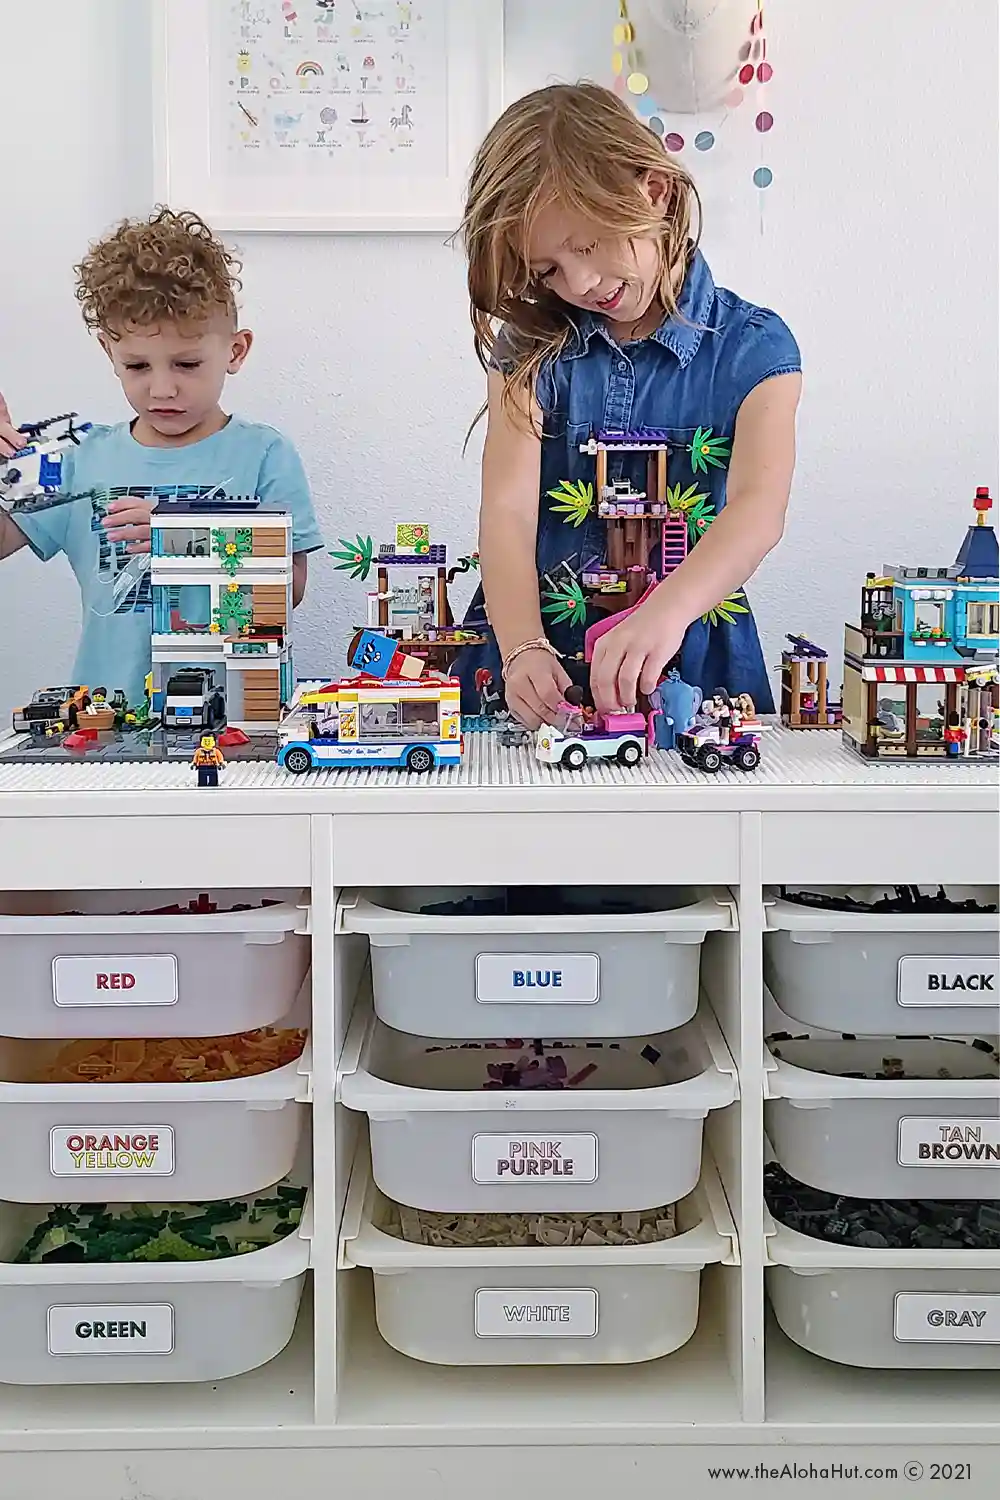 Bag Storage Toys Home Nordic  Organizer Storage Room Kids